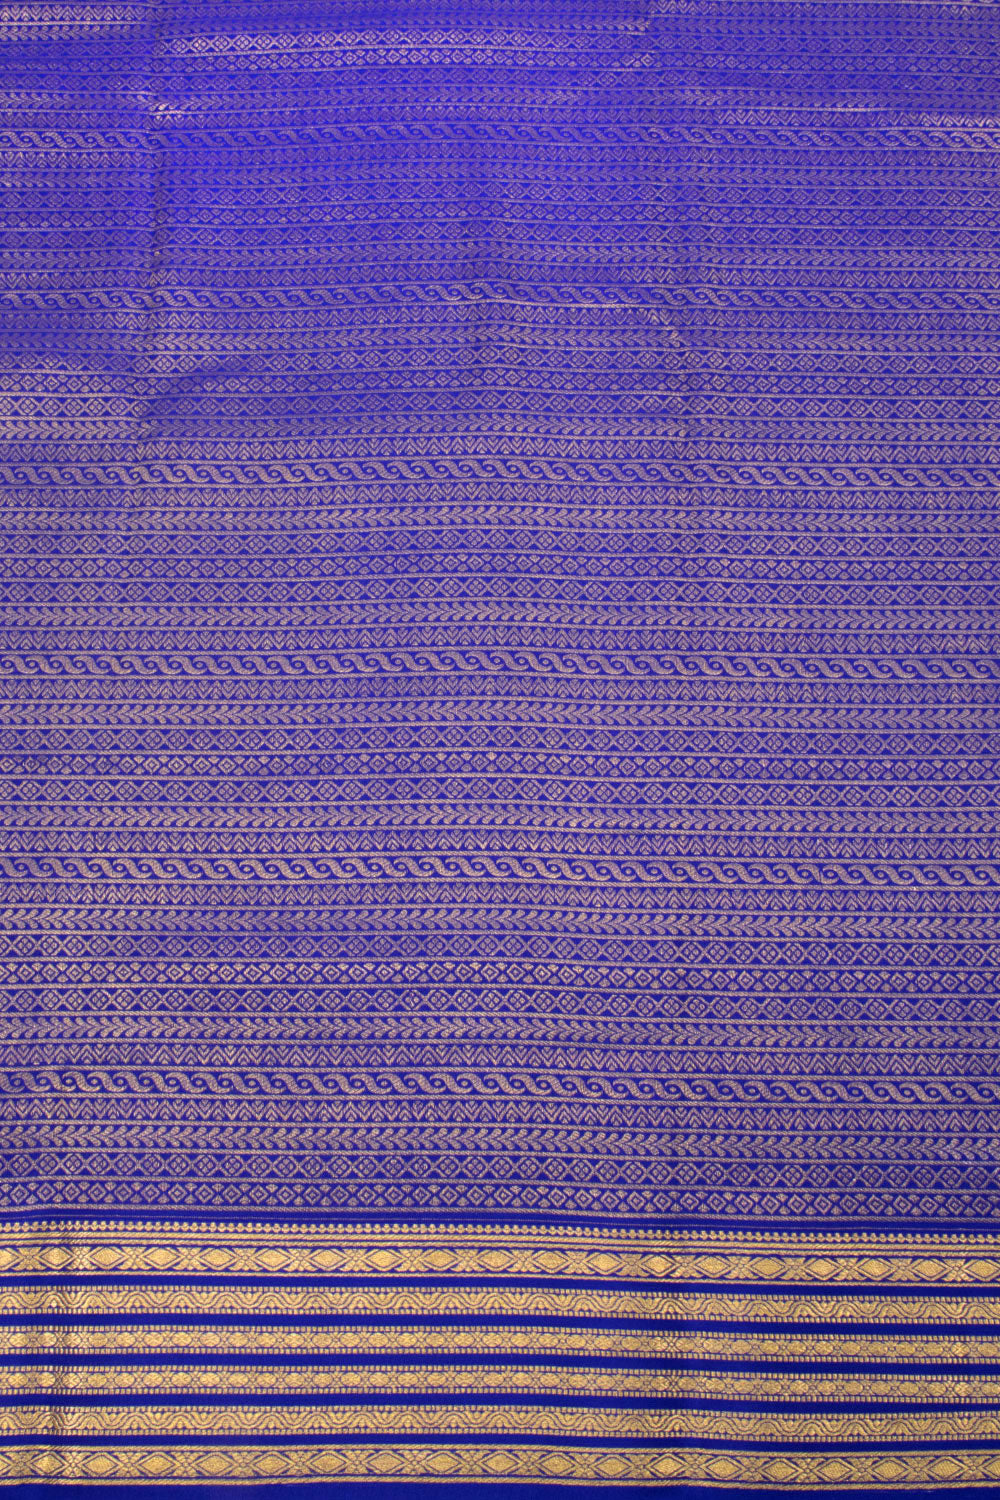 Lavender with Blue Mysore Crepe Silk Saree - 10064335